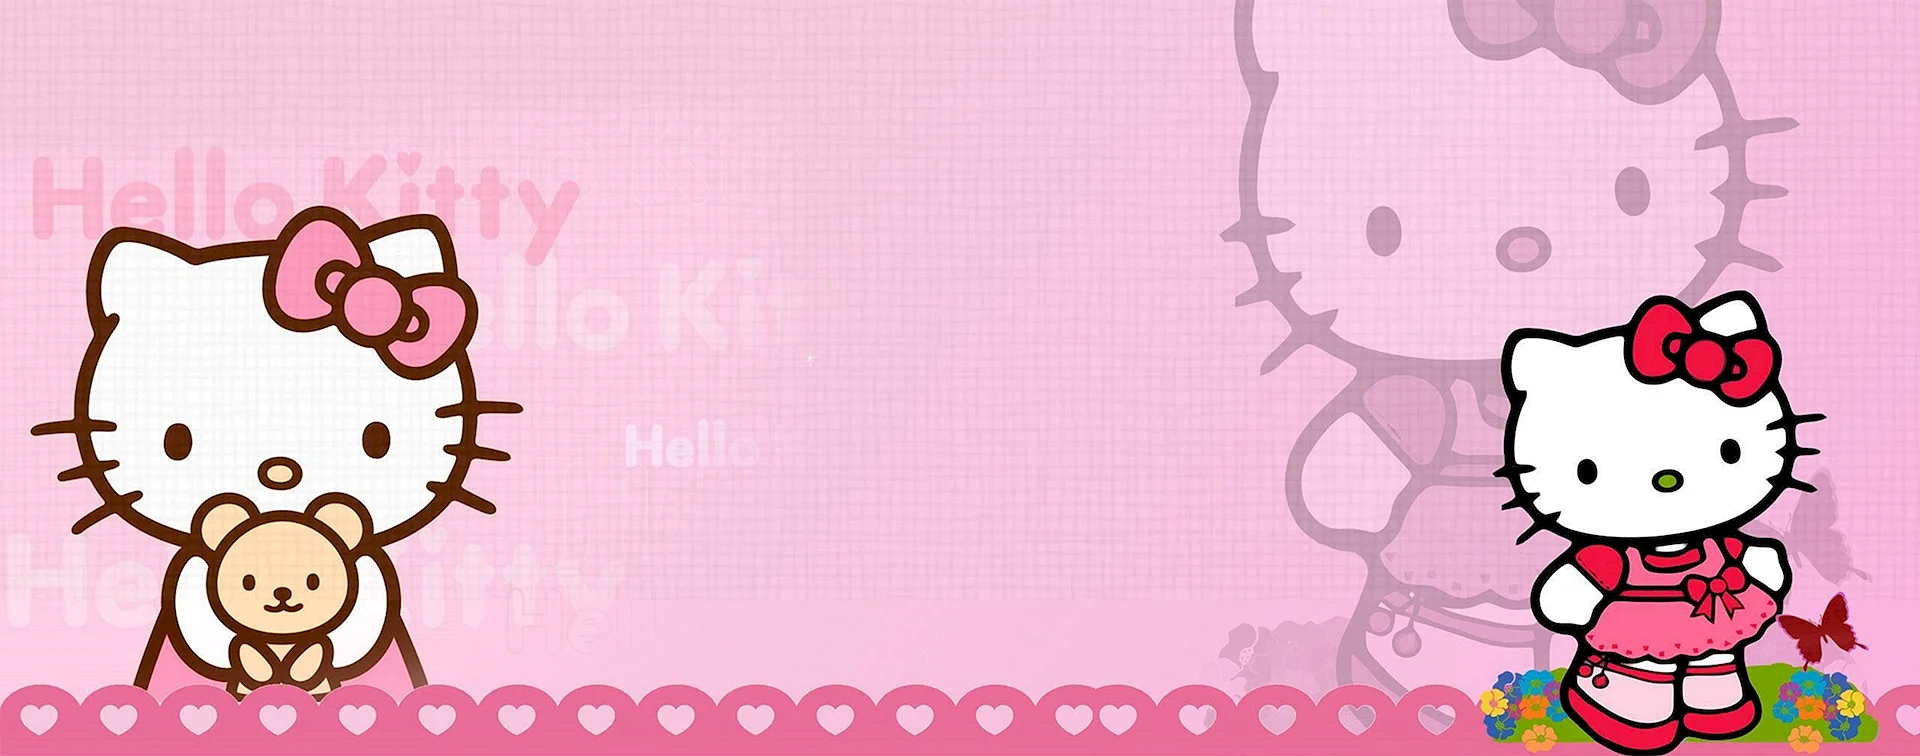 Hello Kitty Banner Wallpaper